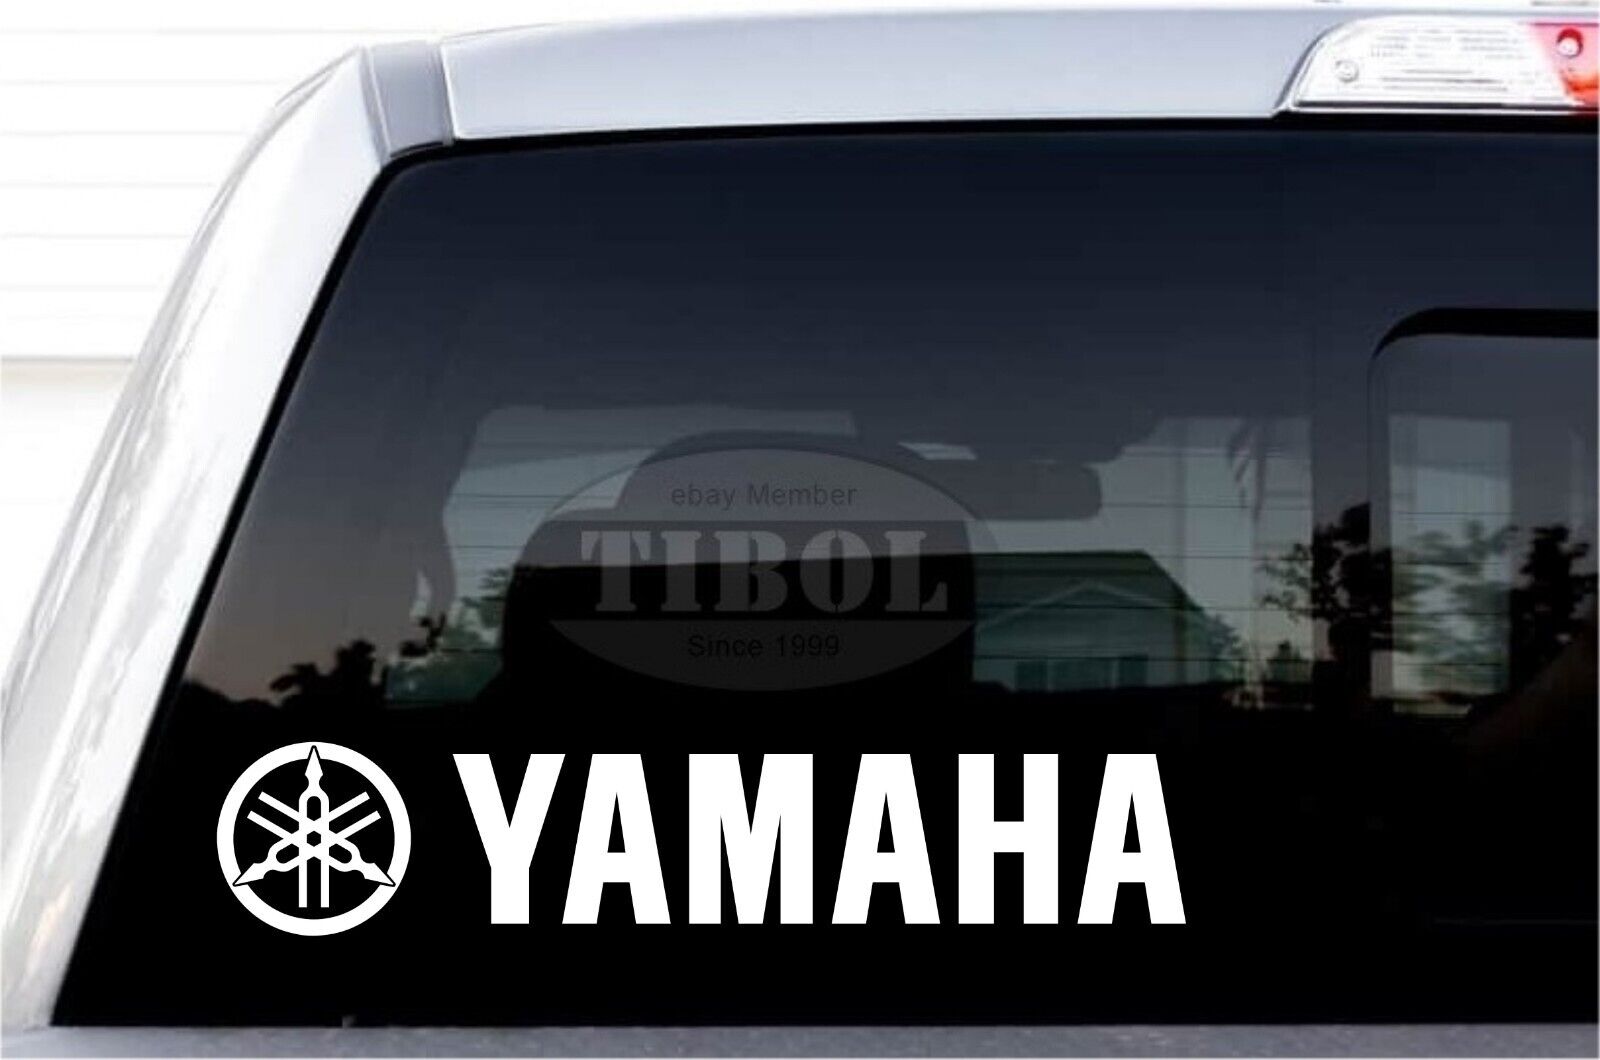 2x YAMAHA with Logo Decals YAMAHA Stickers Helmet Bike ATV PWC Jetski UTV